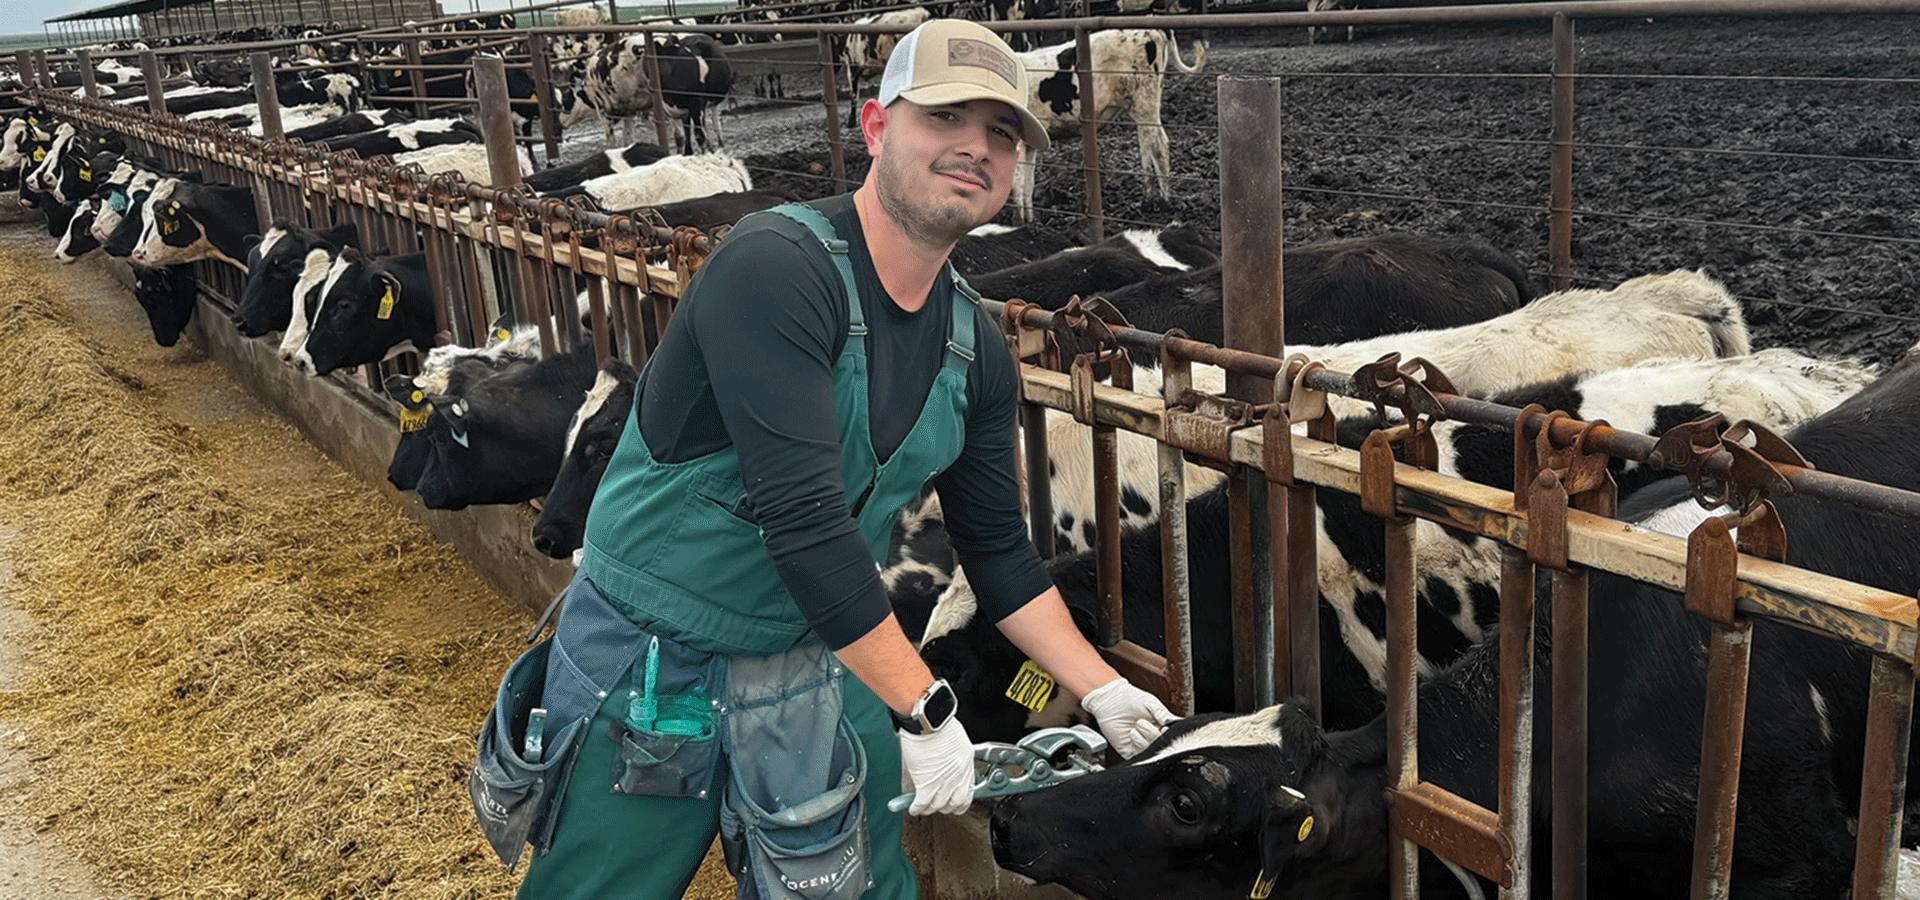 Richard Ruiz takes care of cows at the farm